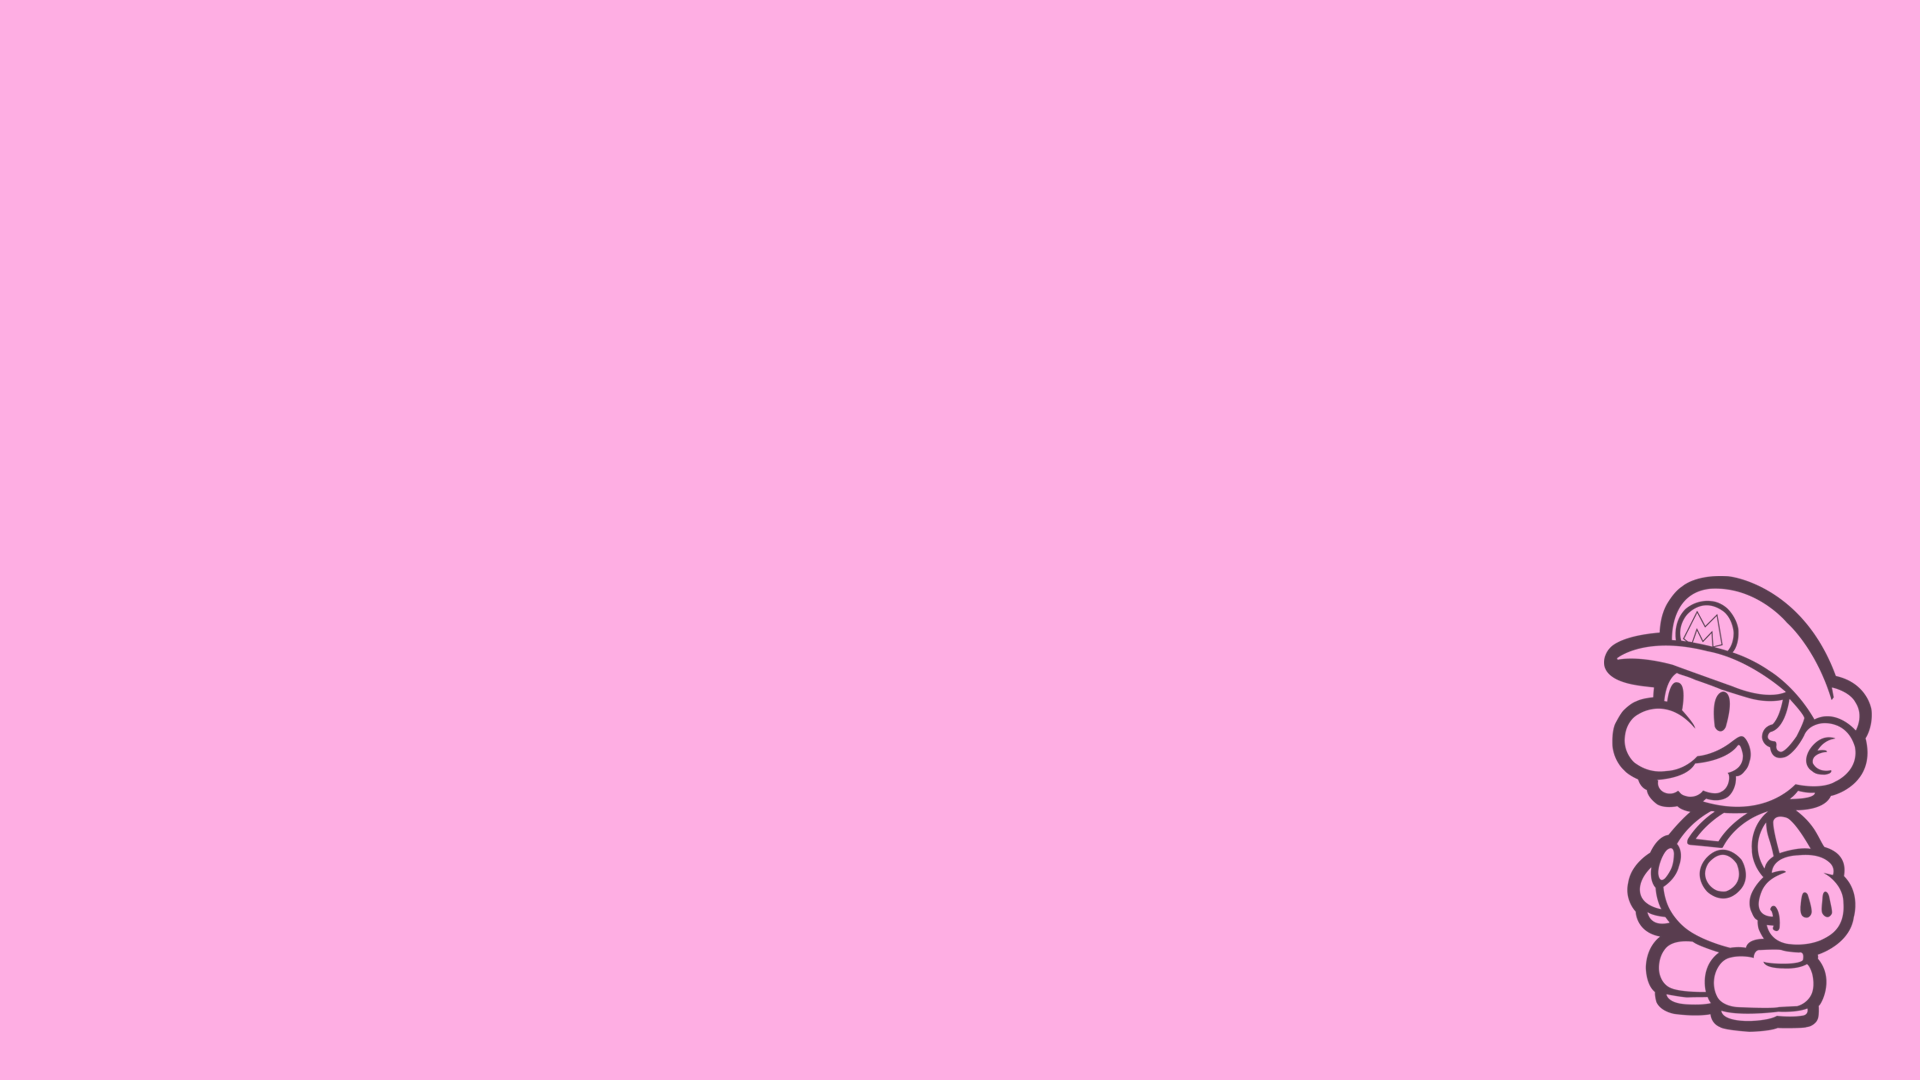 General 1920x1080 simple background minimalism video game characters pink light pink logo silhouette off-center video games pink background Mario video game men Nintendo fan art